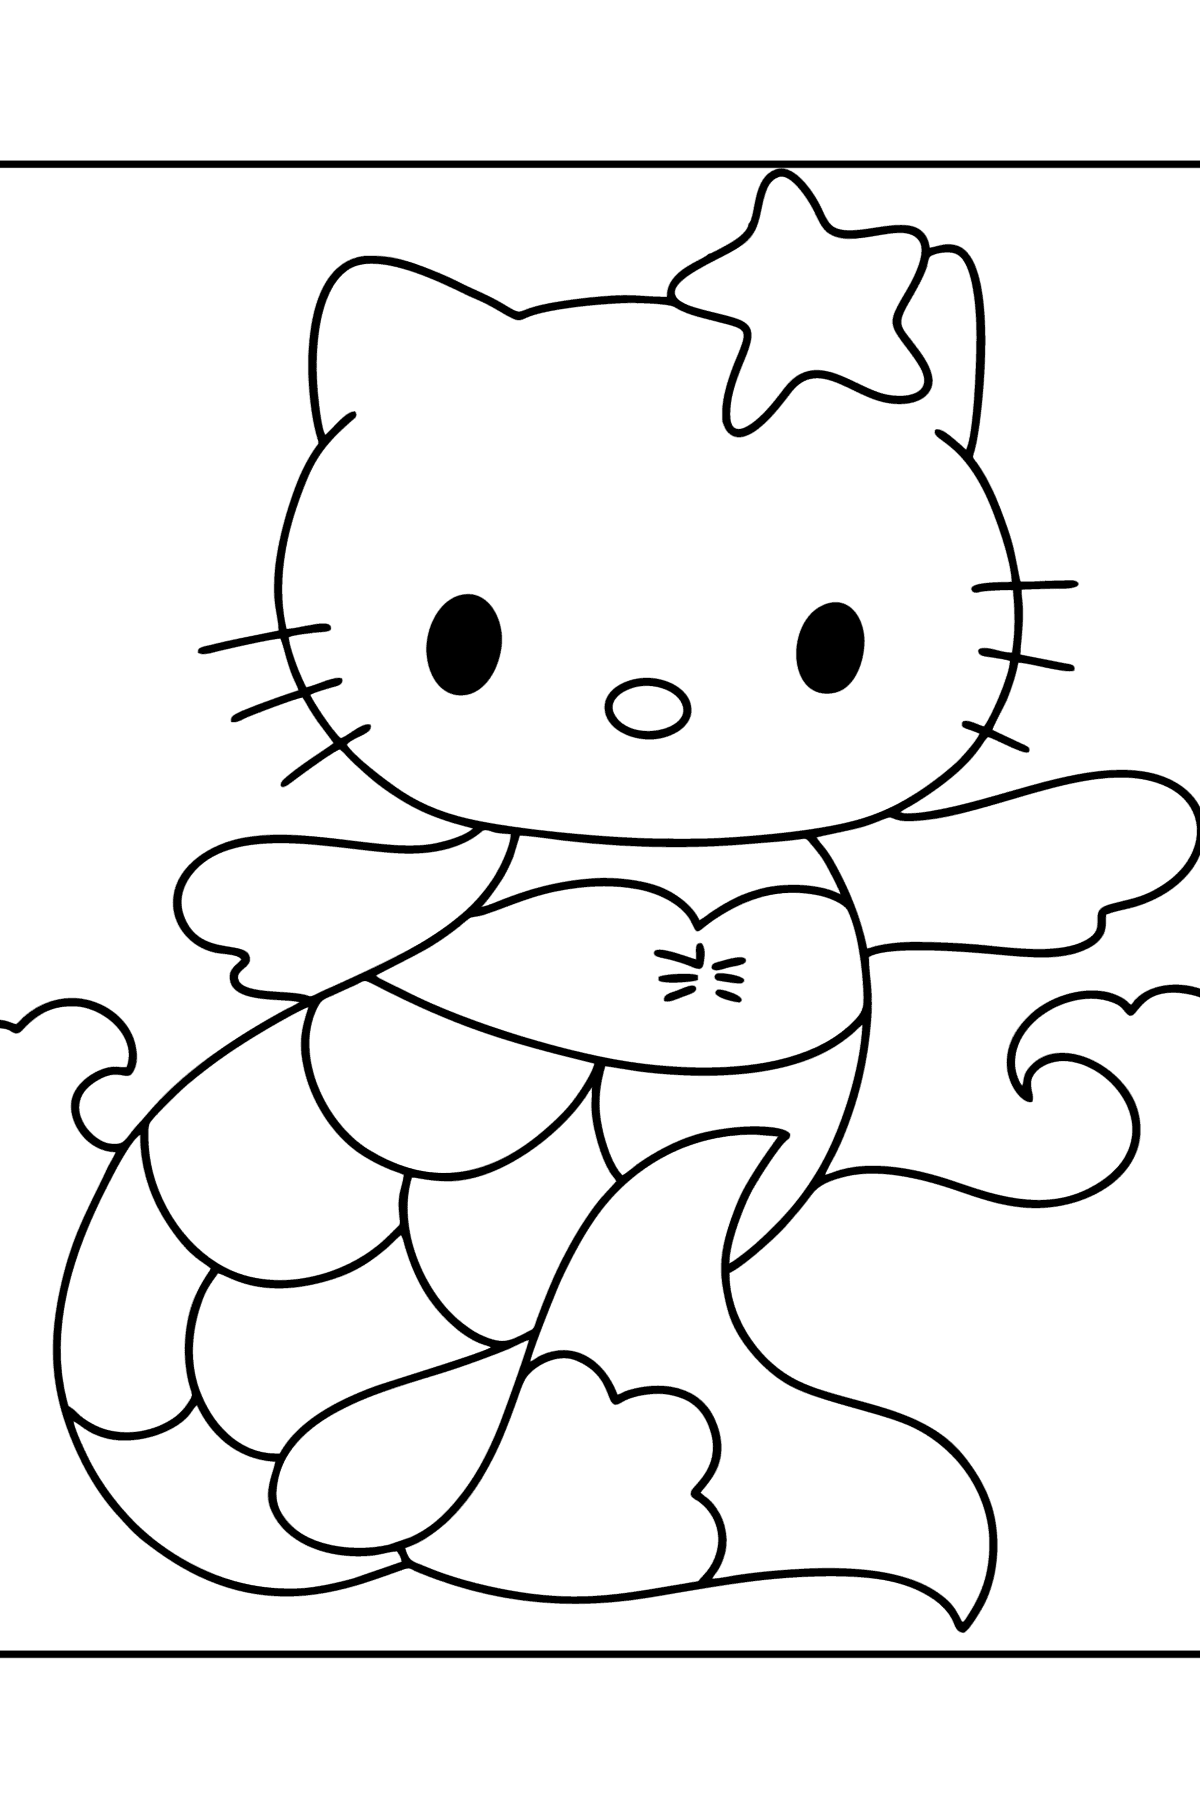 Раскраска Хелло Китти (Hello Kitty) русалка - Картинки для Детей